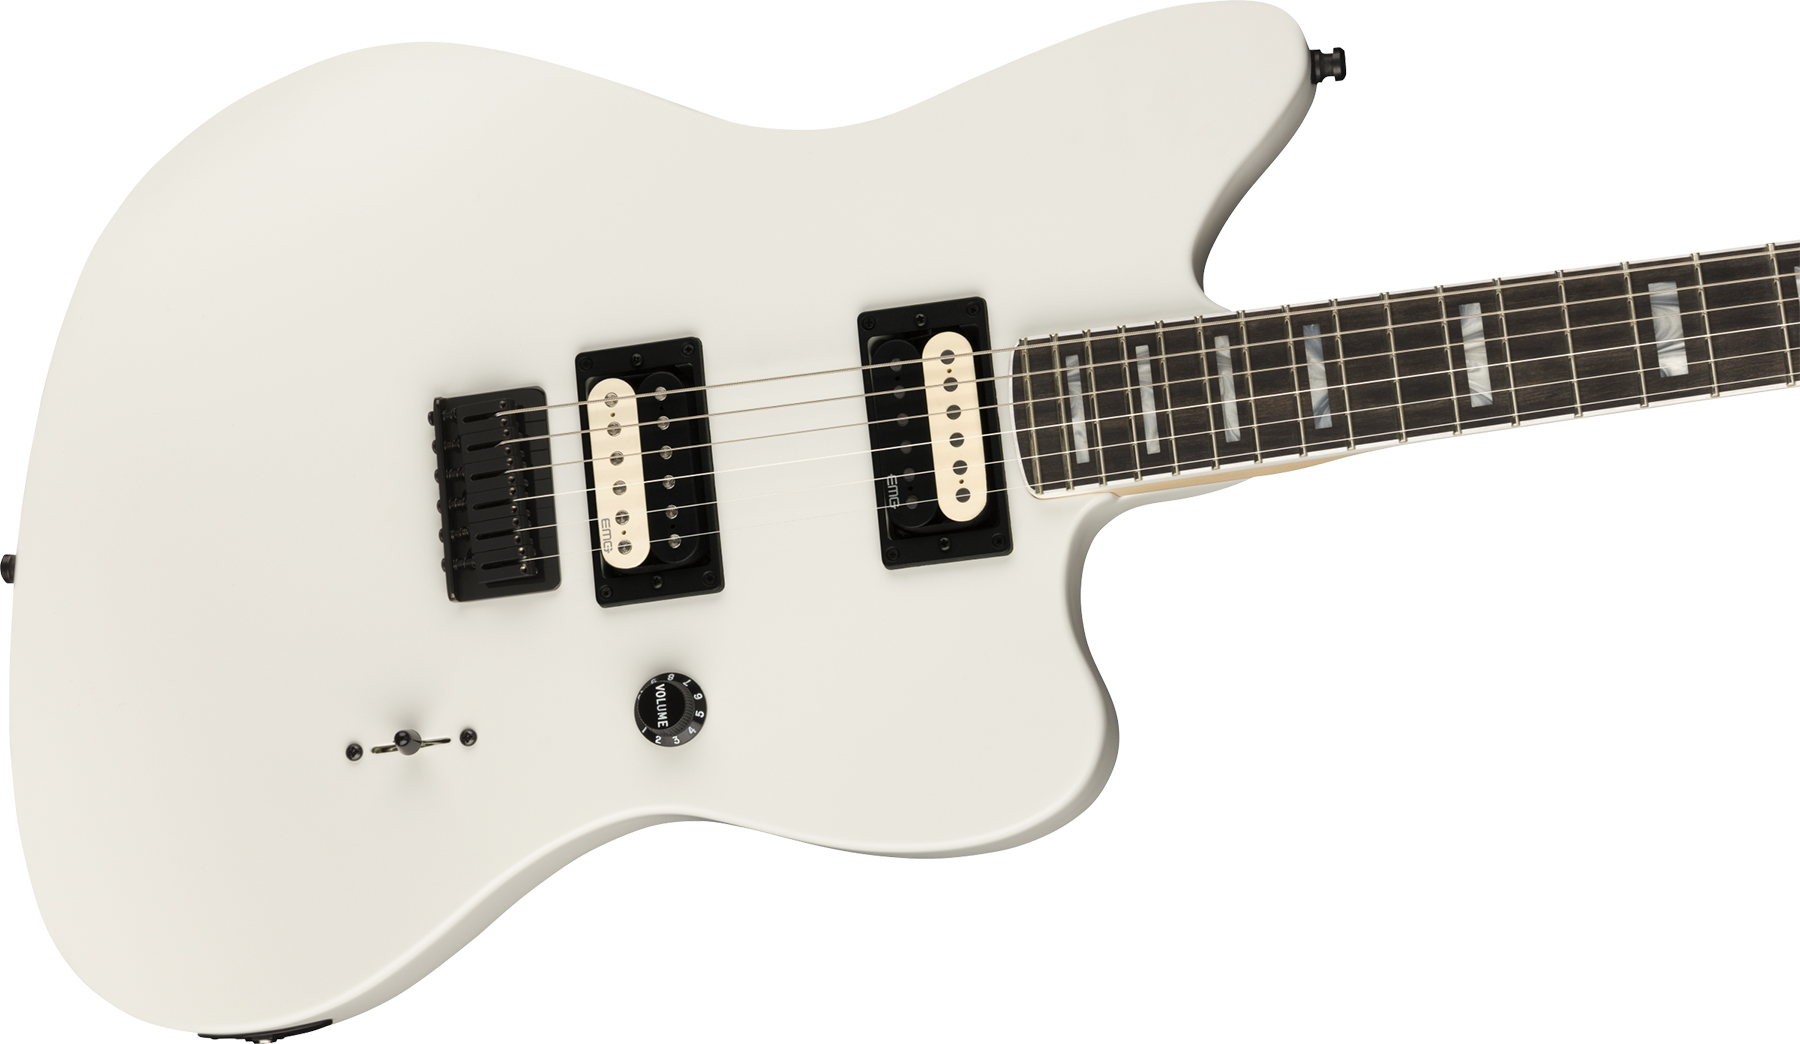 Fender Jim Root Jazzmaster V4 Mex Signature Hh Emg Ht Eb - Artic White - Retro rock electric guitar - Variation 2